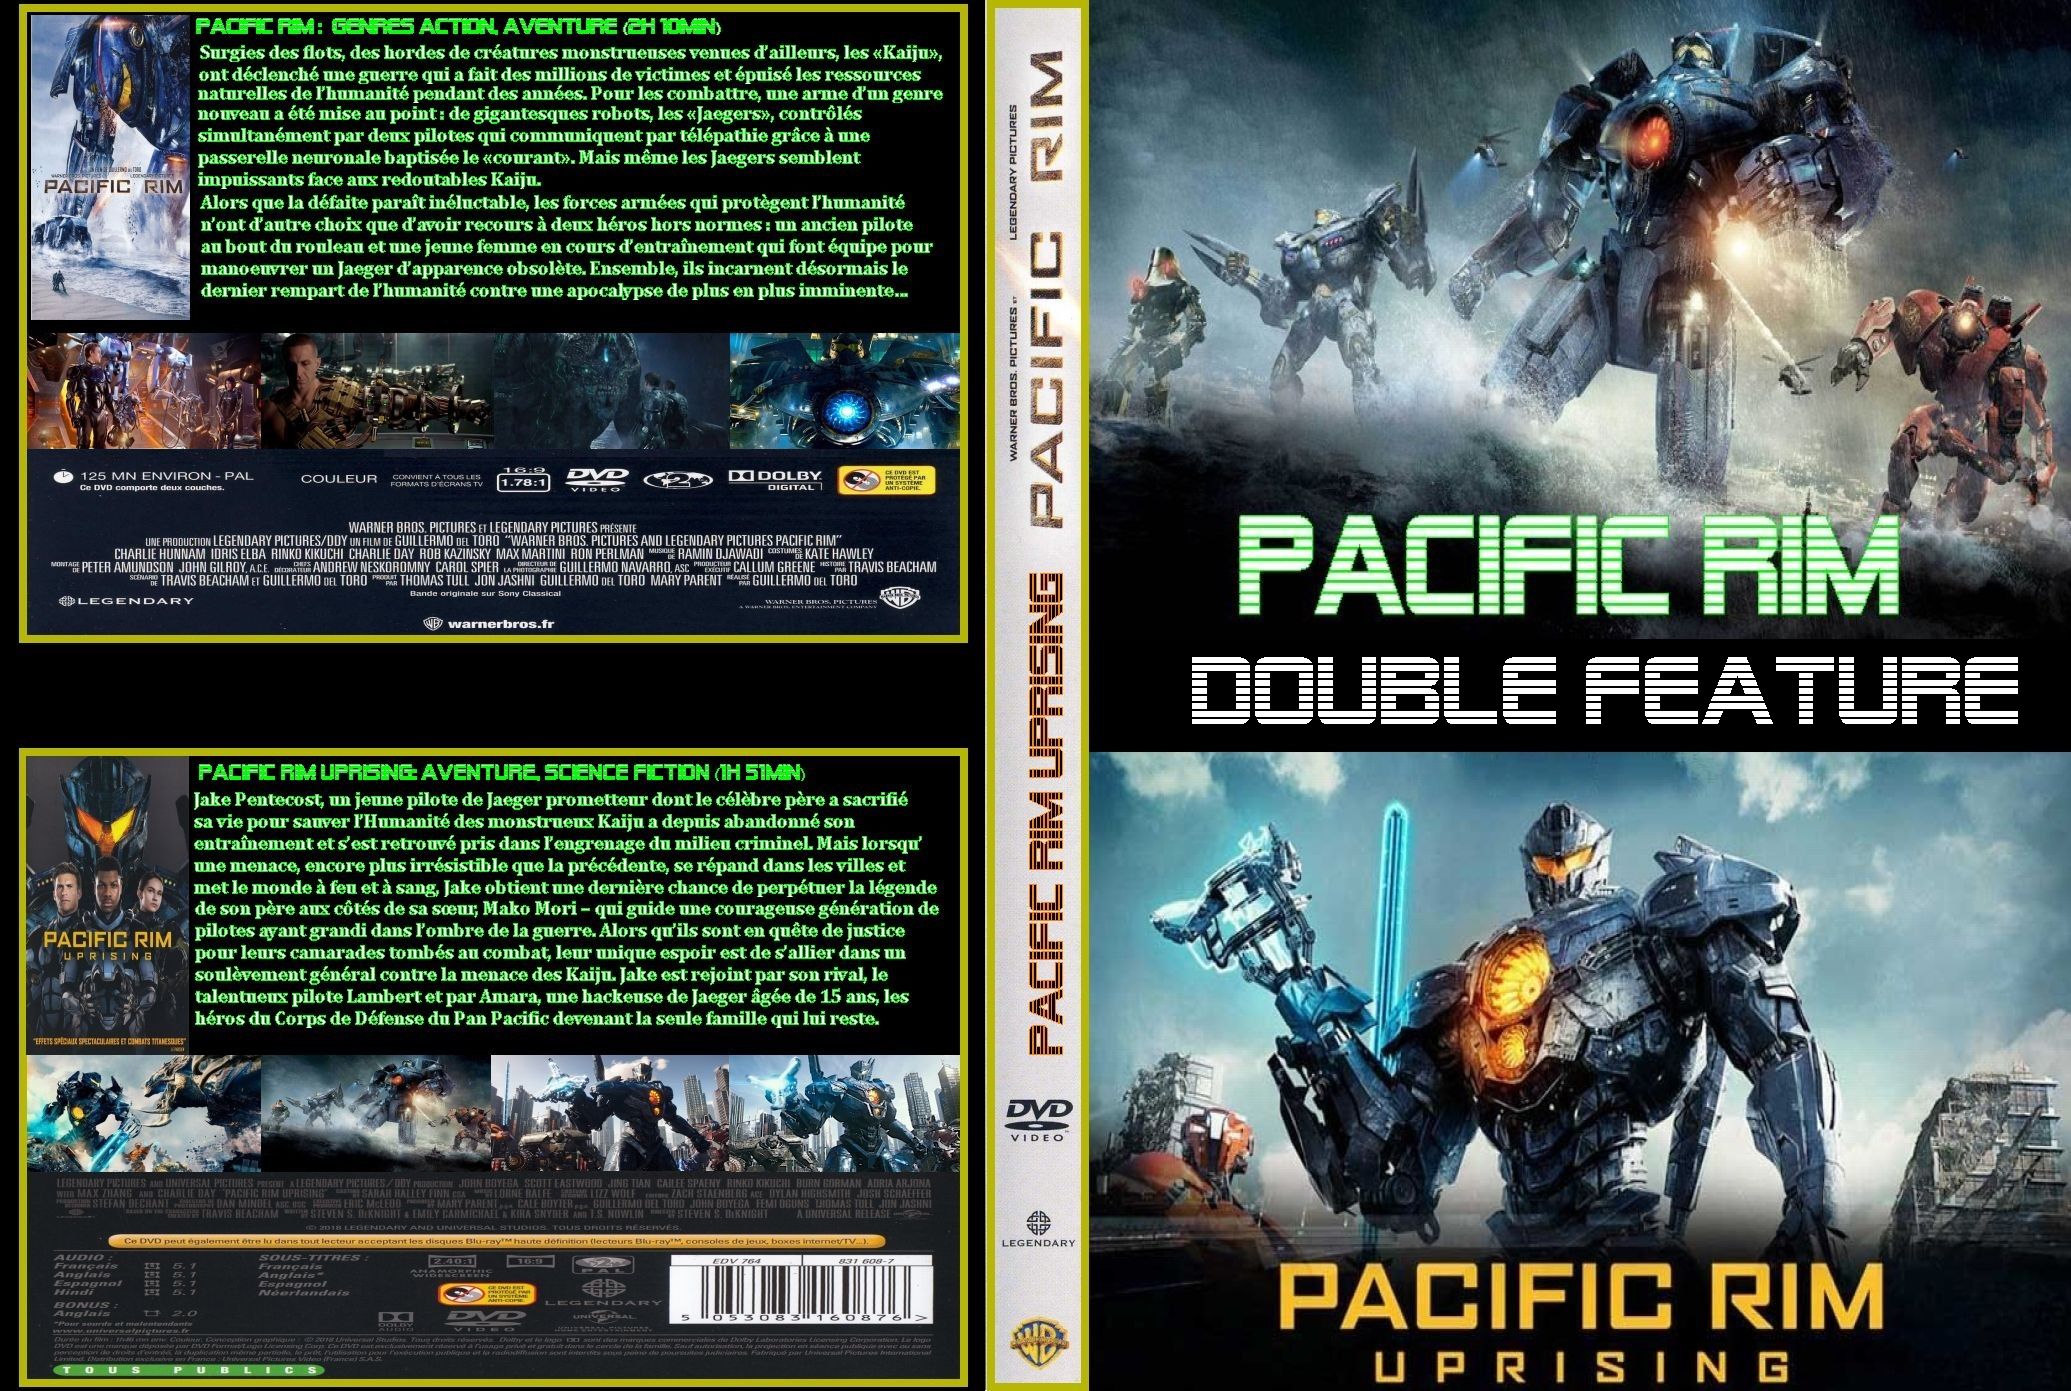 Jaquette DVD Pacific Rim Duologie custom v2